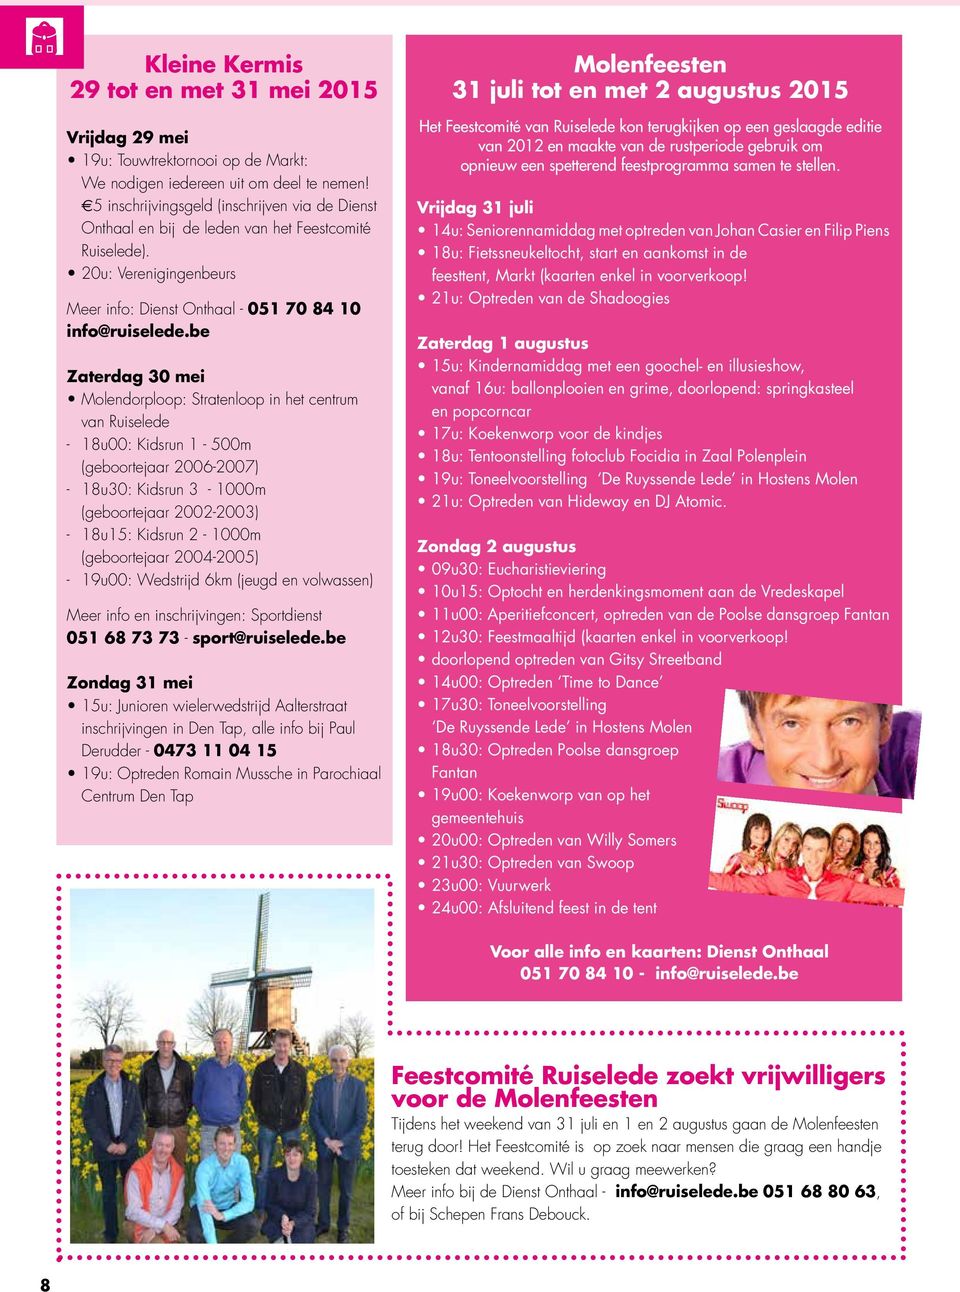 be Zaterdag 30 mei Molendorploop: Stratenloop in het centrum van Ruiselede - 18u00: Kidsrun 1-500m (geboortejaar 2006-2007) - 18u30: Kidsrun 3-1000m (geboortejaar 2002-2003) - 18u15: Kidsrun 2-1000m